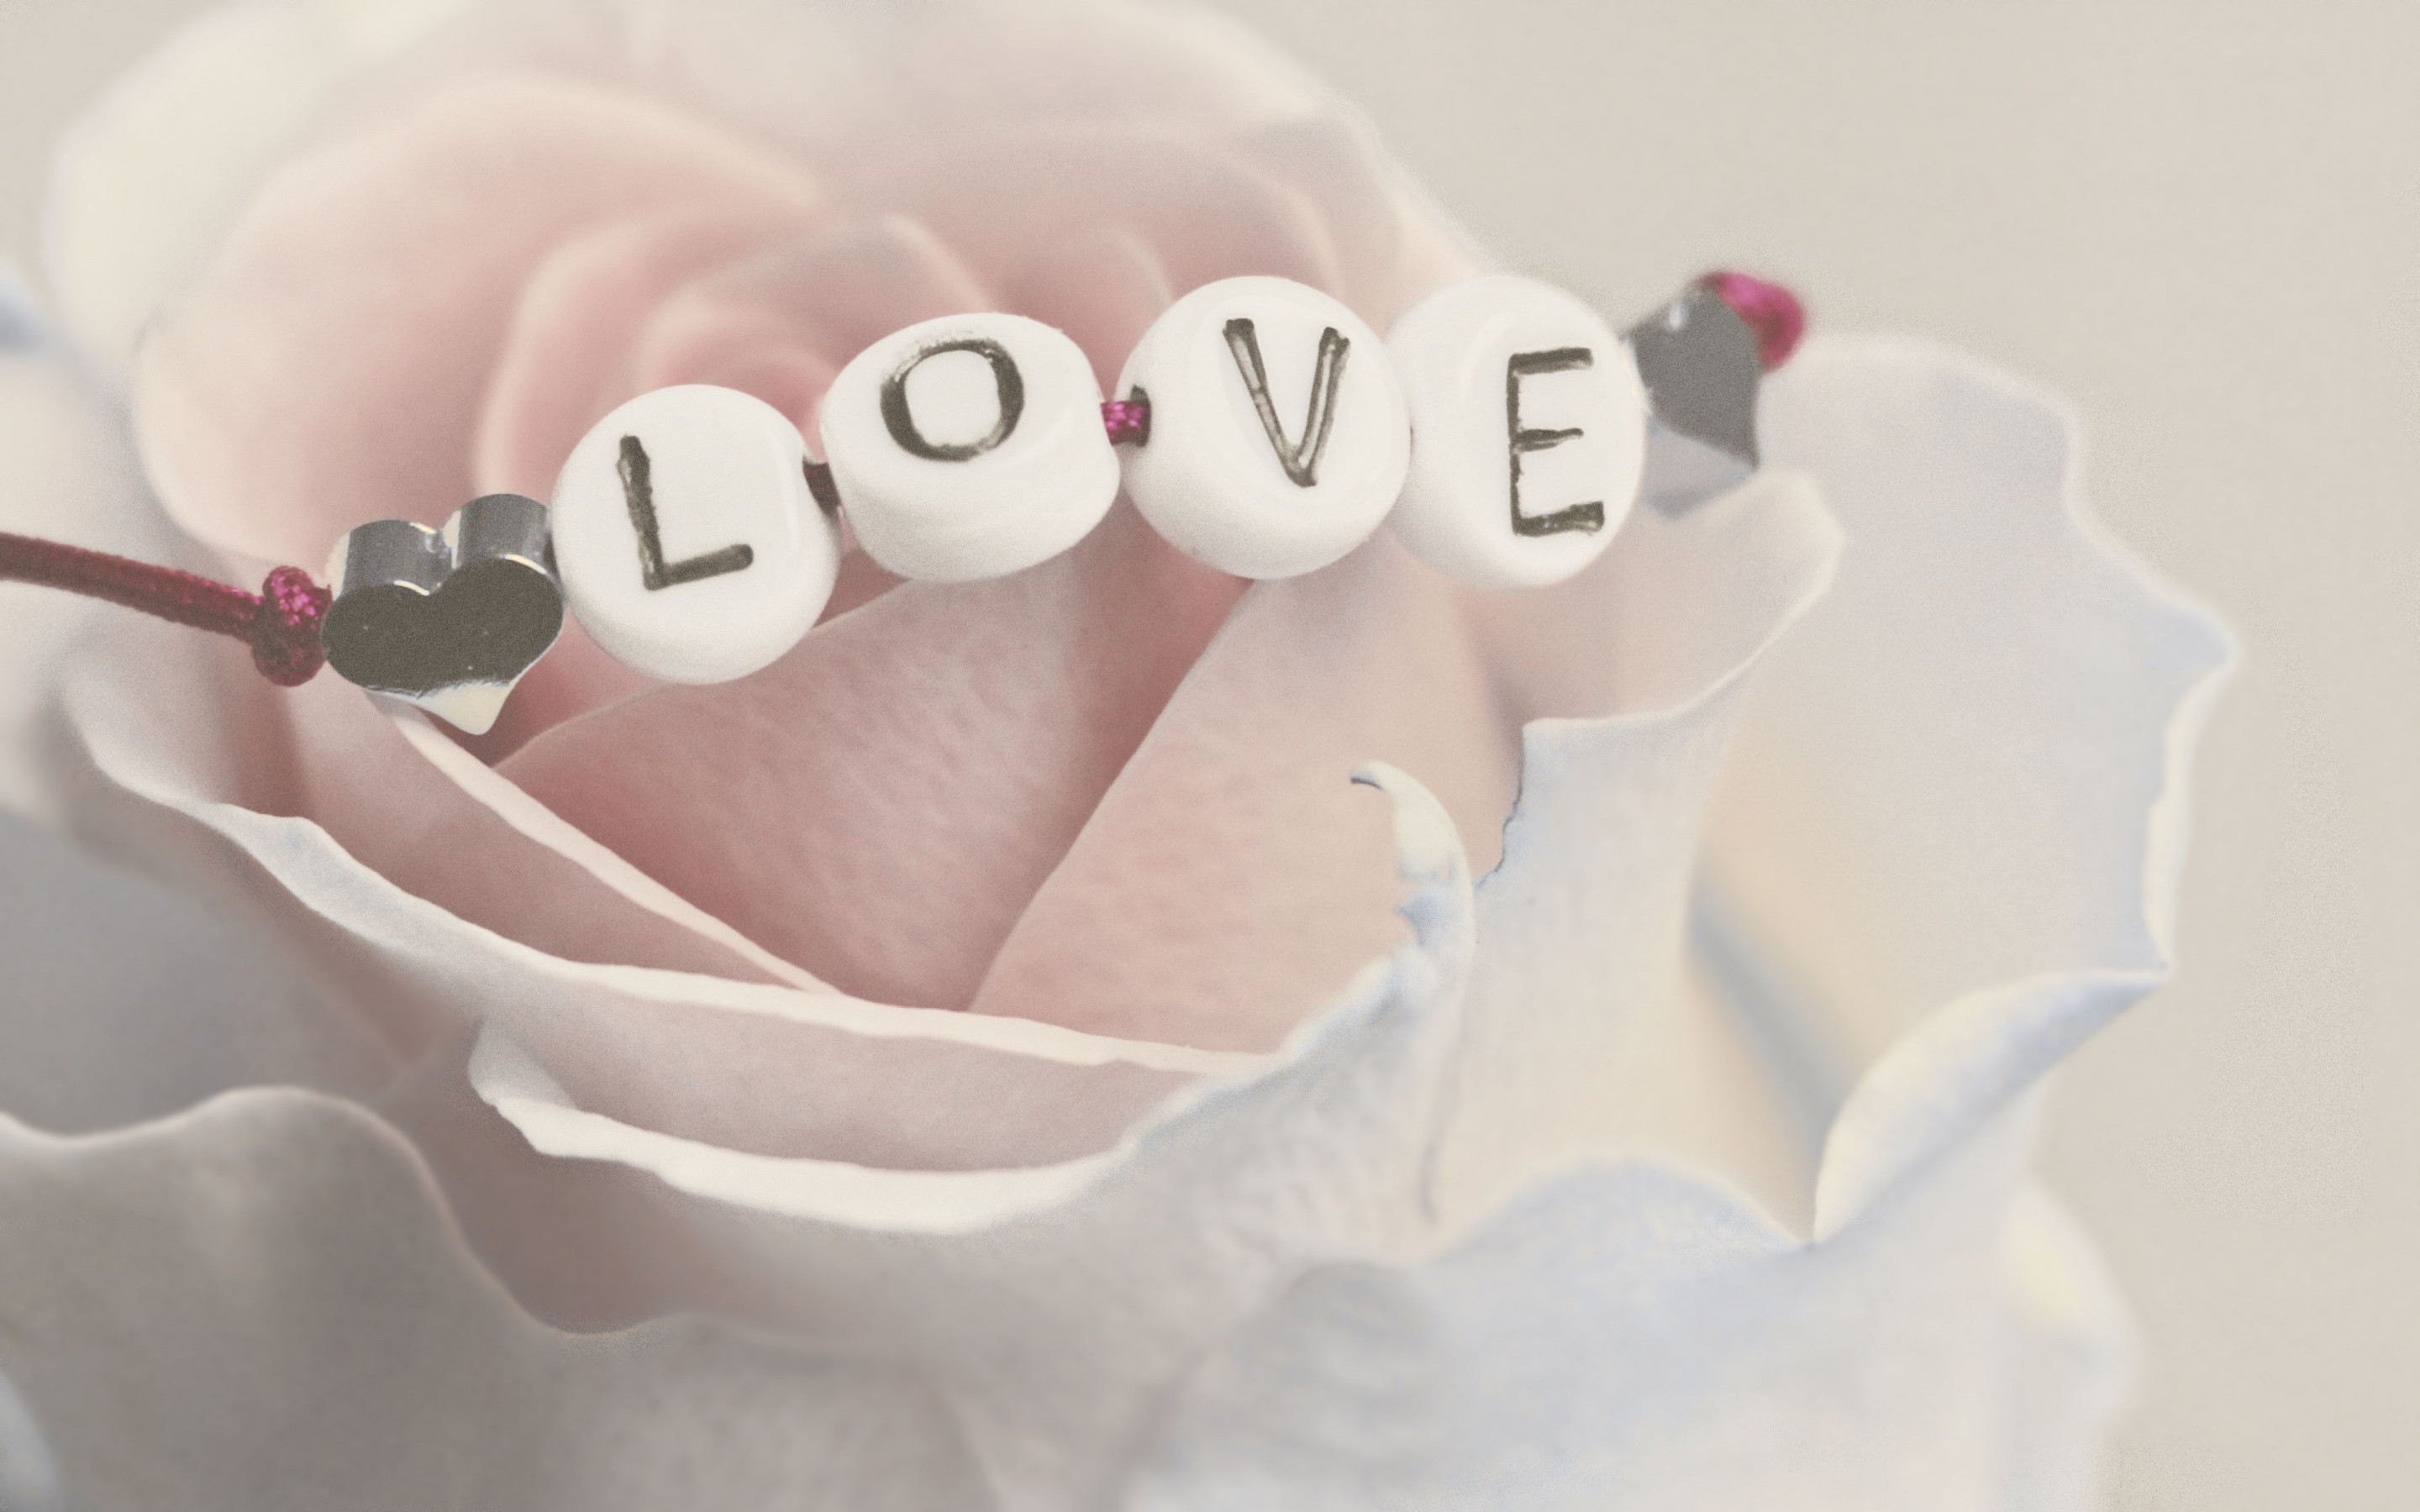 Download wallpaper: Love bracelet on a white rose 2880x1800